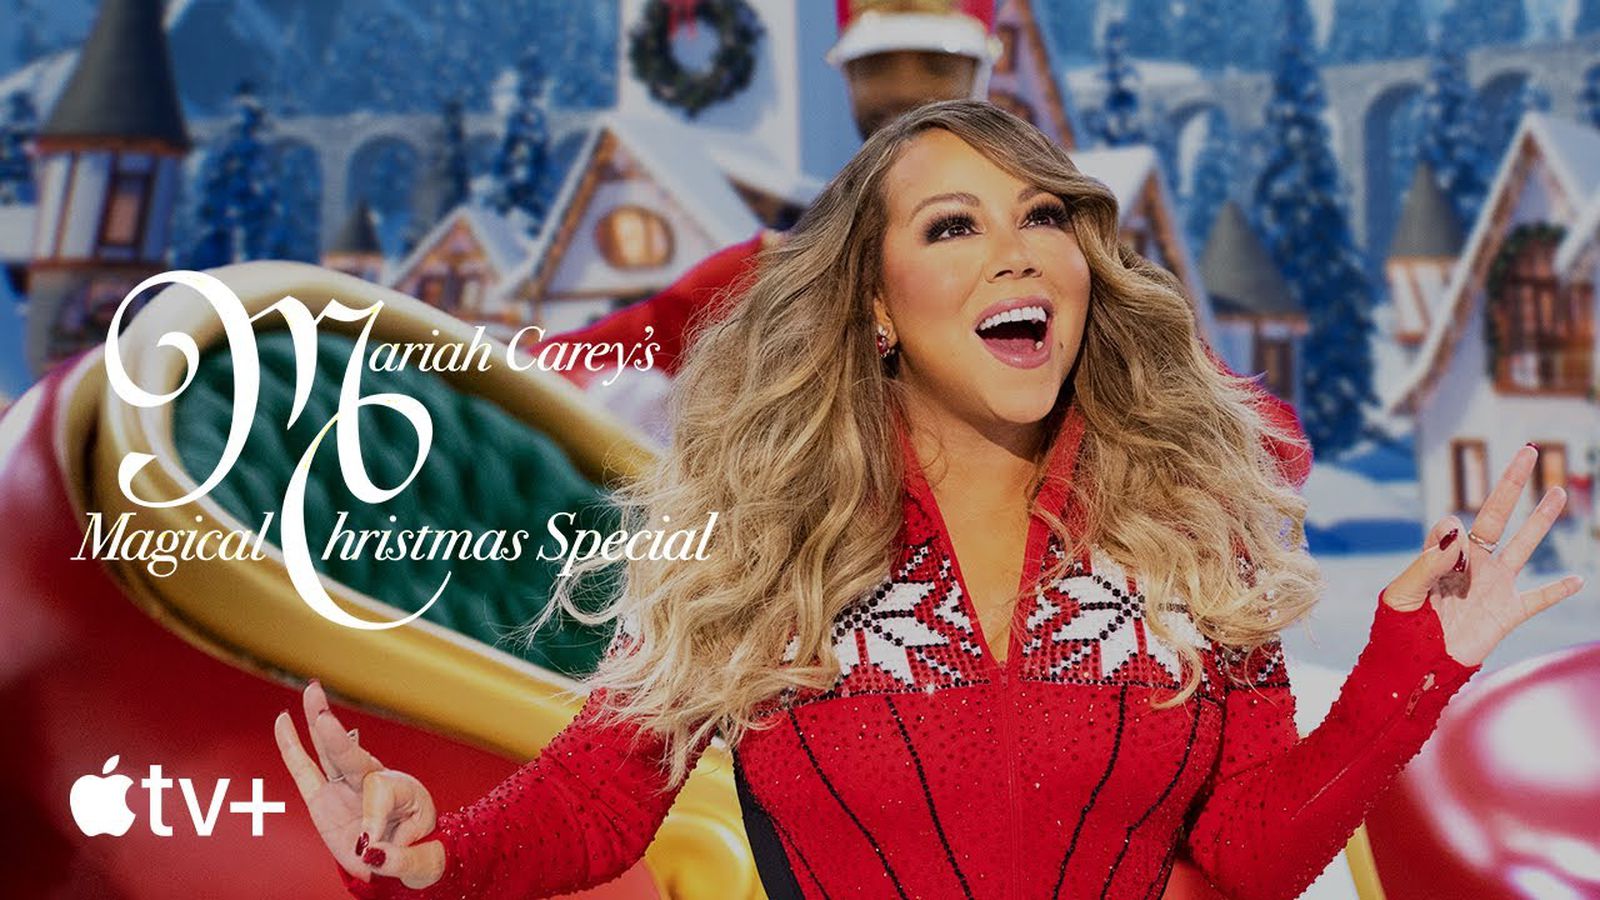 Mariah Carey Christmas Photo Wallpapers